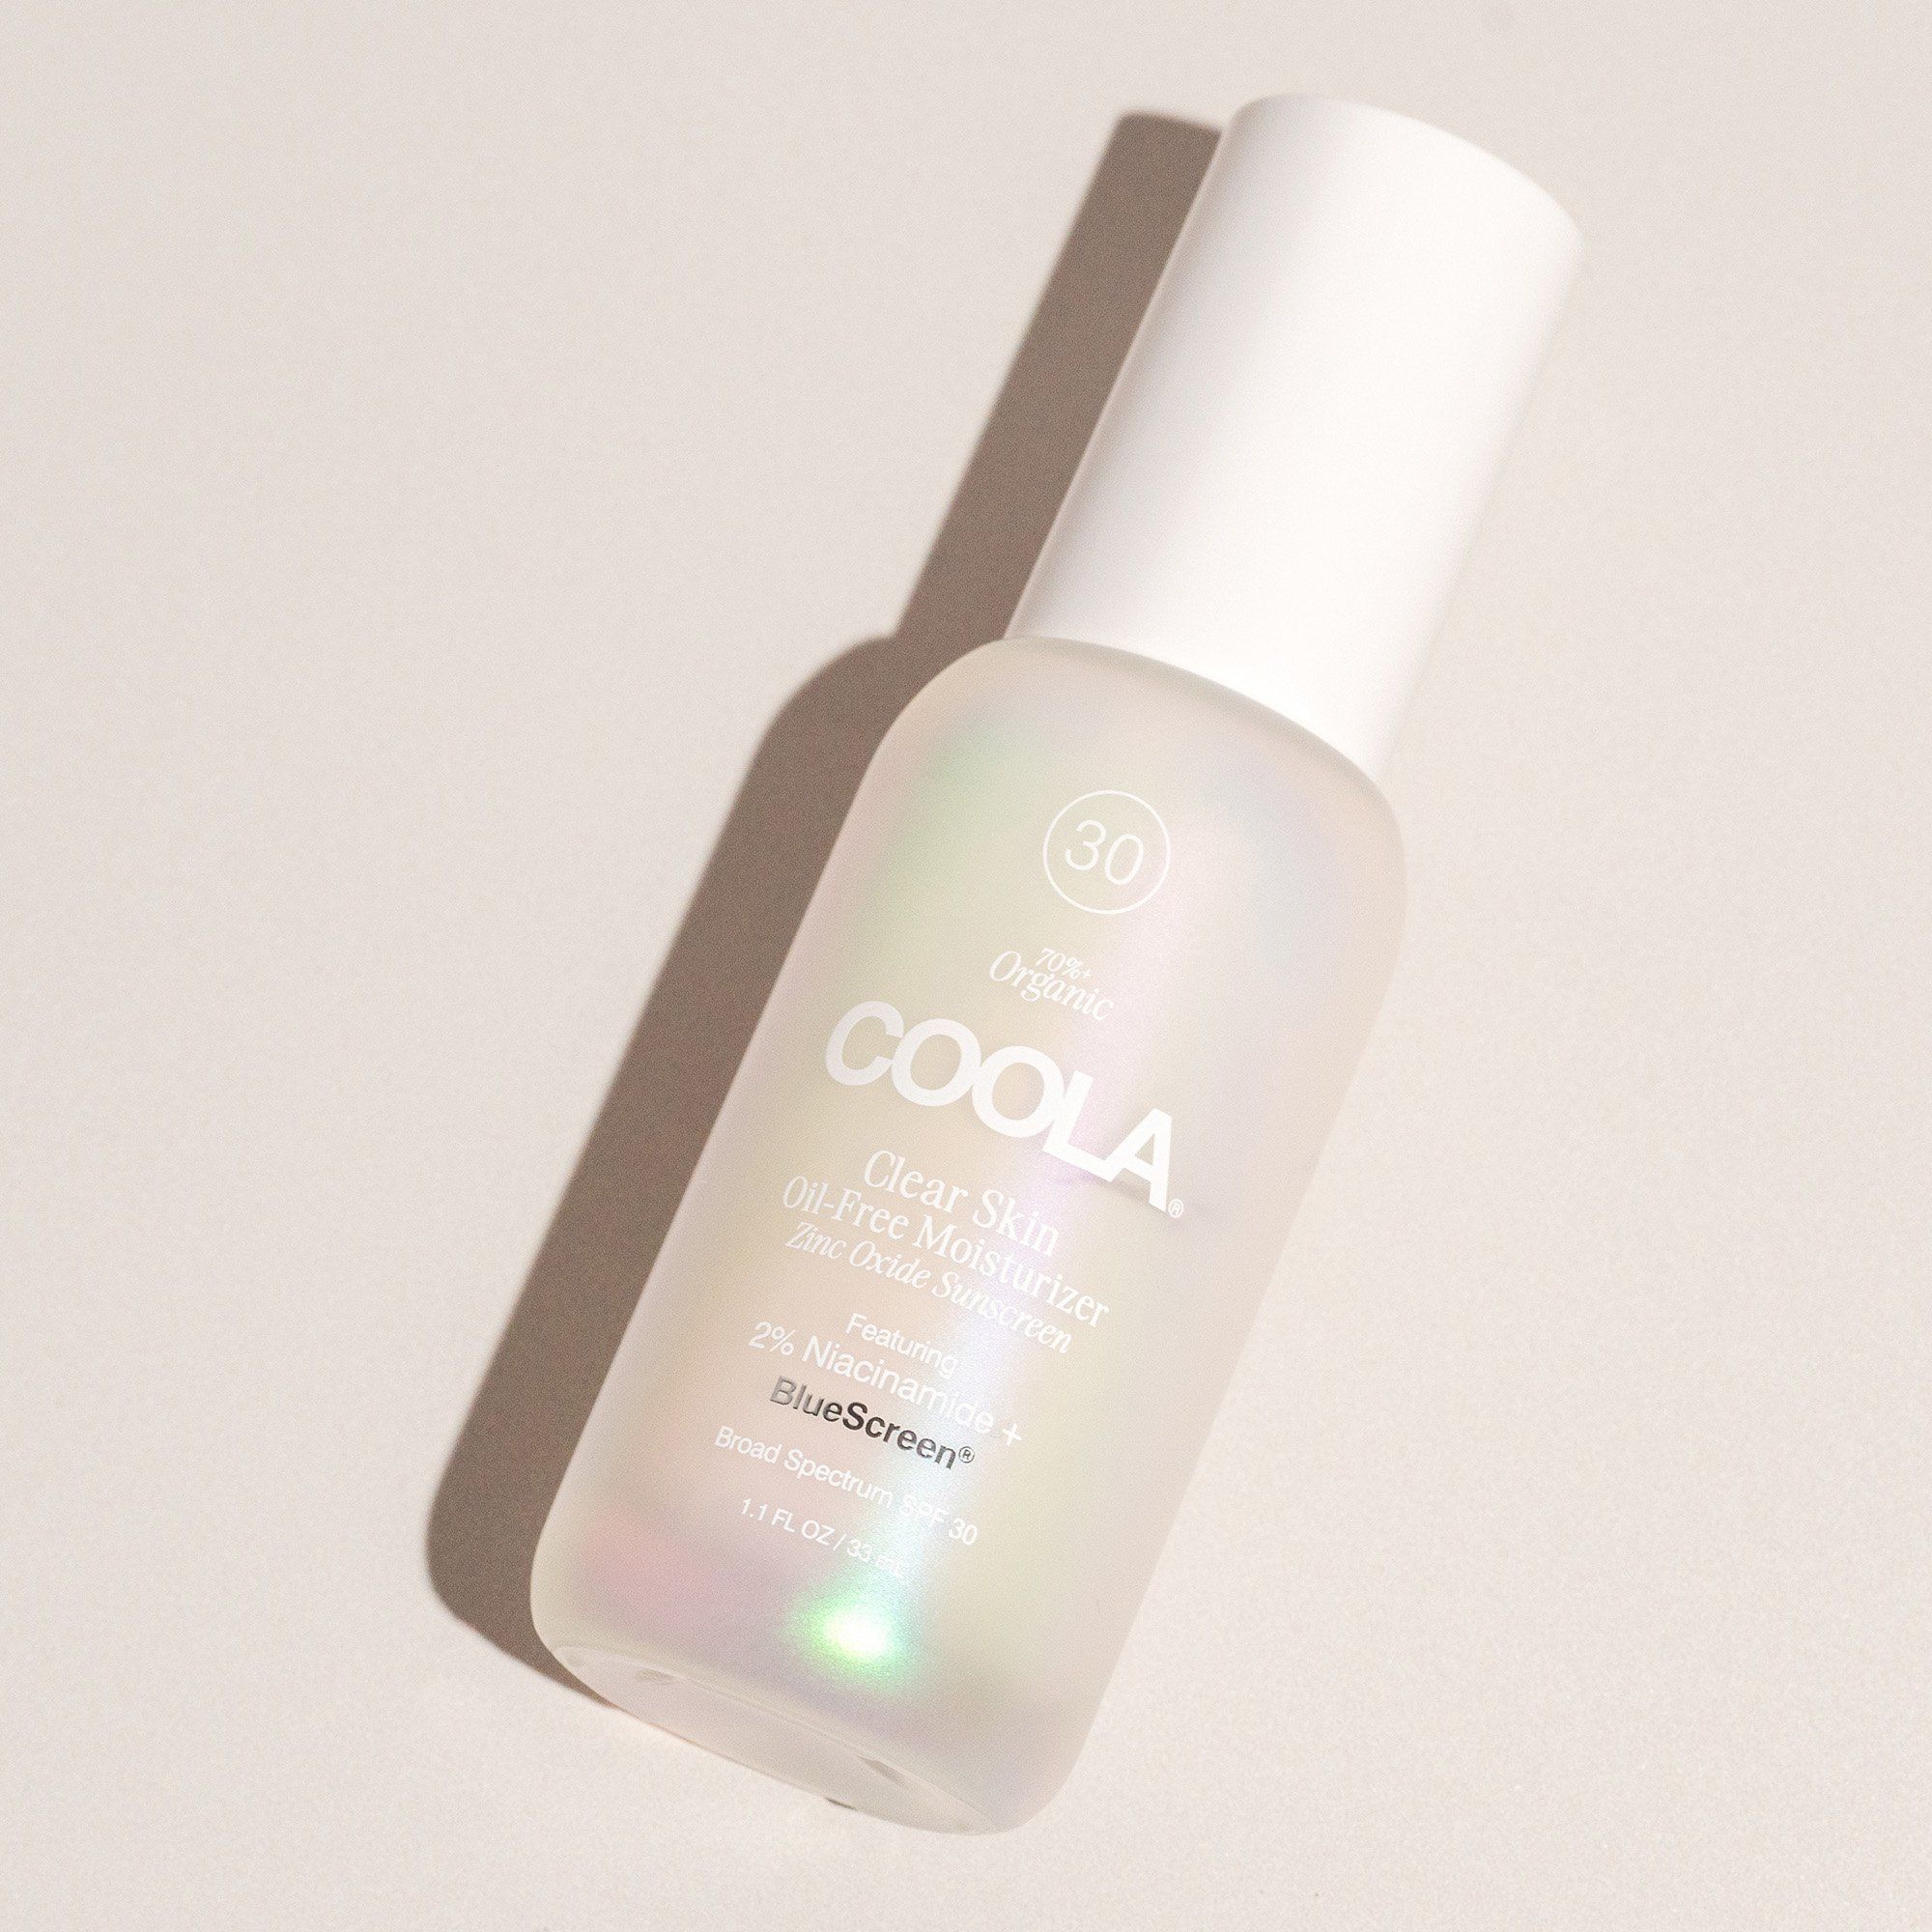 COOLA Clear Skin Oil-Free Moisturizer,  SPF 30 - 1.1 fl oz